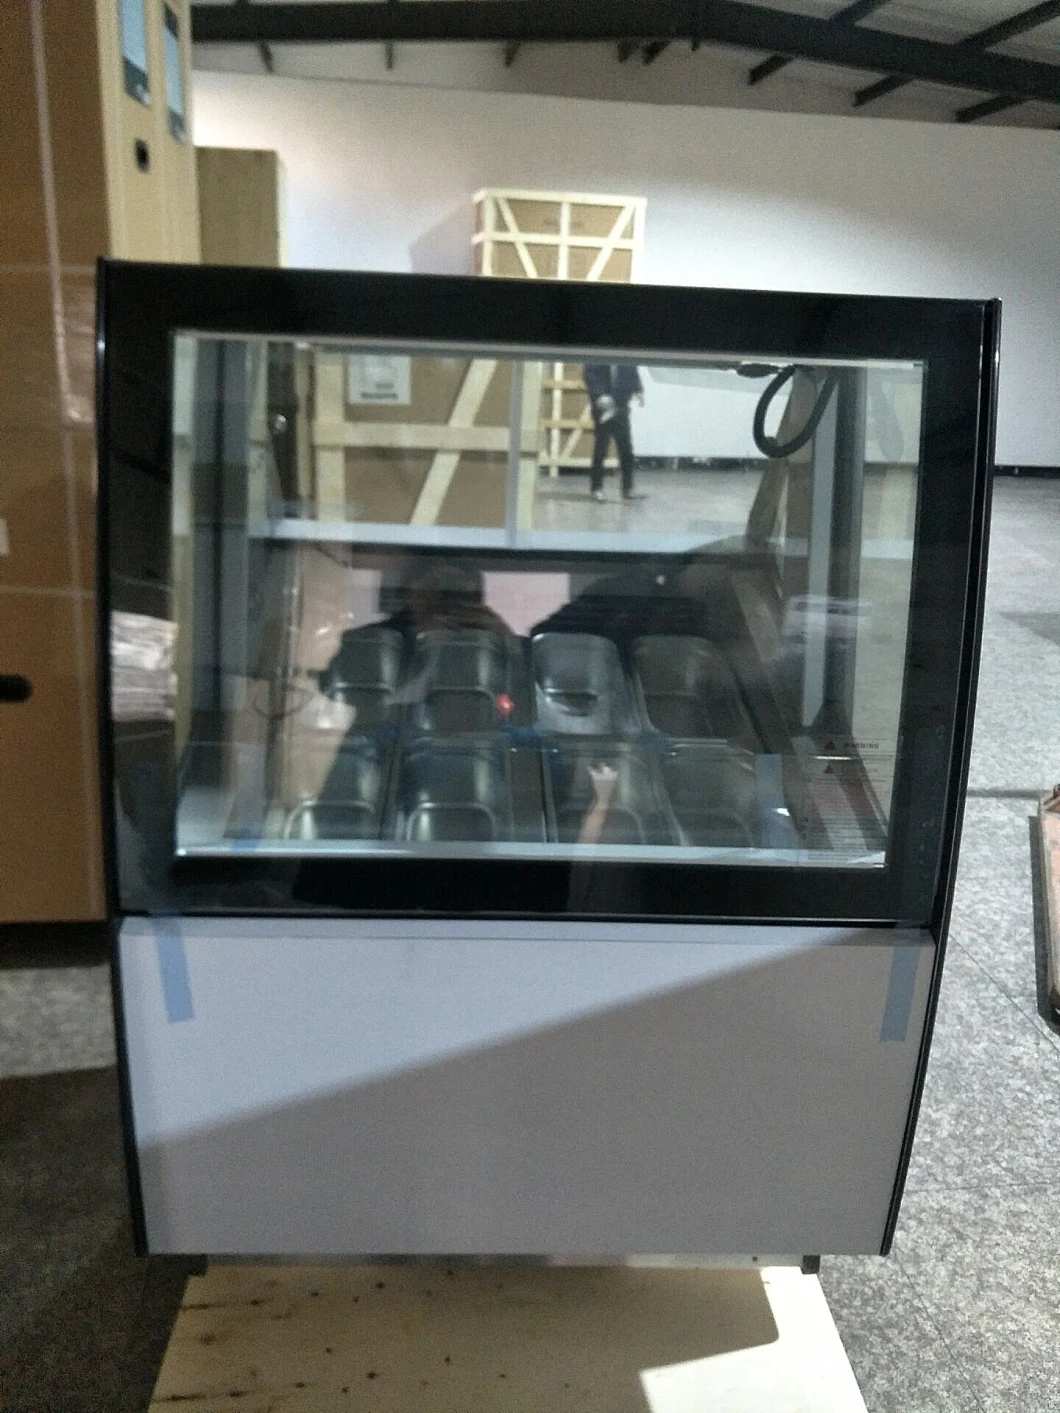 Smeta Commercial Countertop Glass Ice Cream Display Showcase Freezer